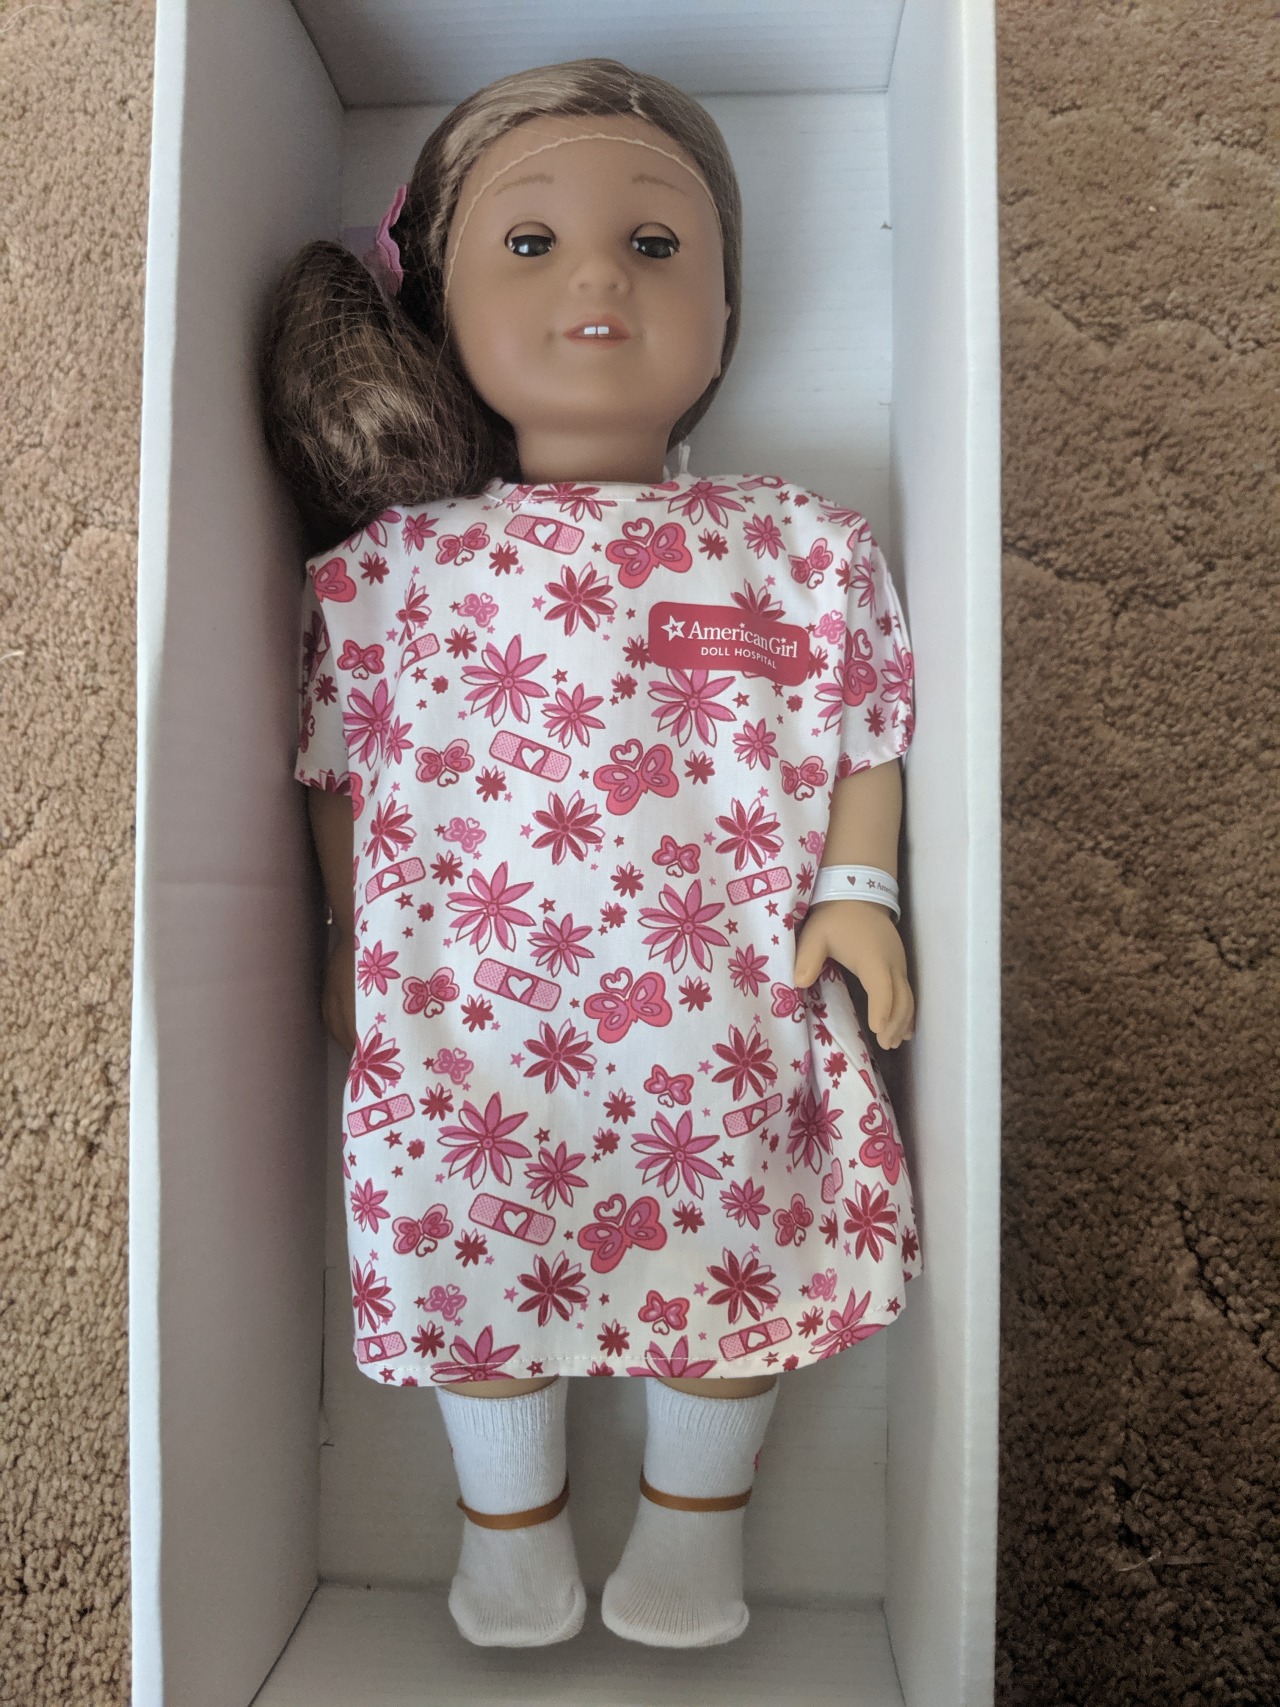 american girl doll hospital phone number